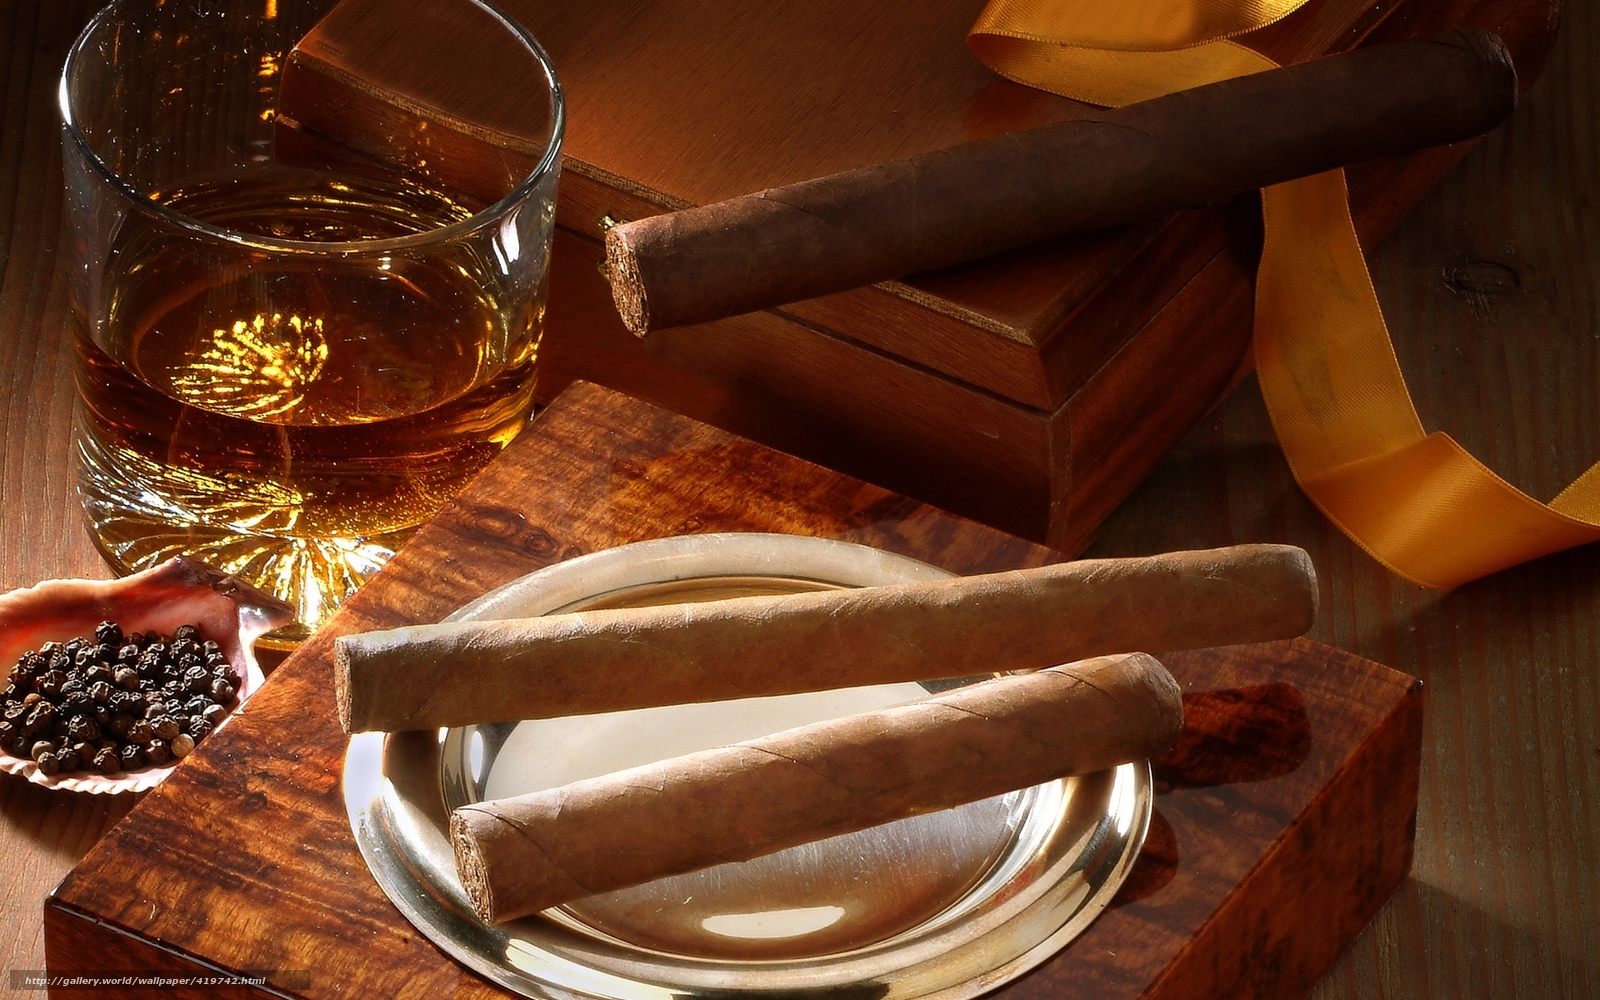 Download wallpaper Cigars box whiskey glass free